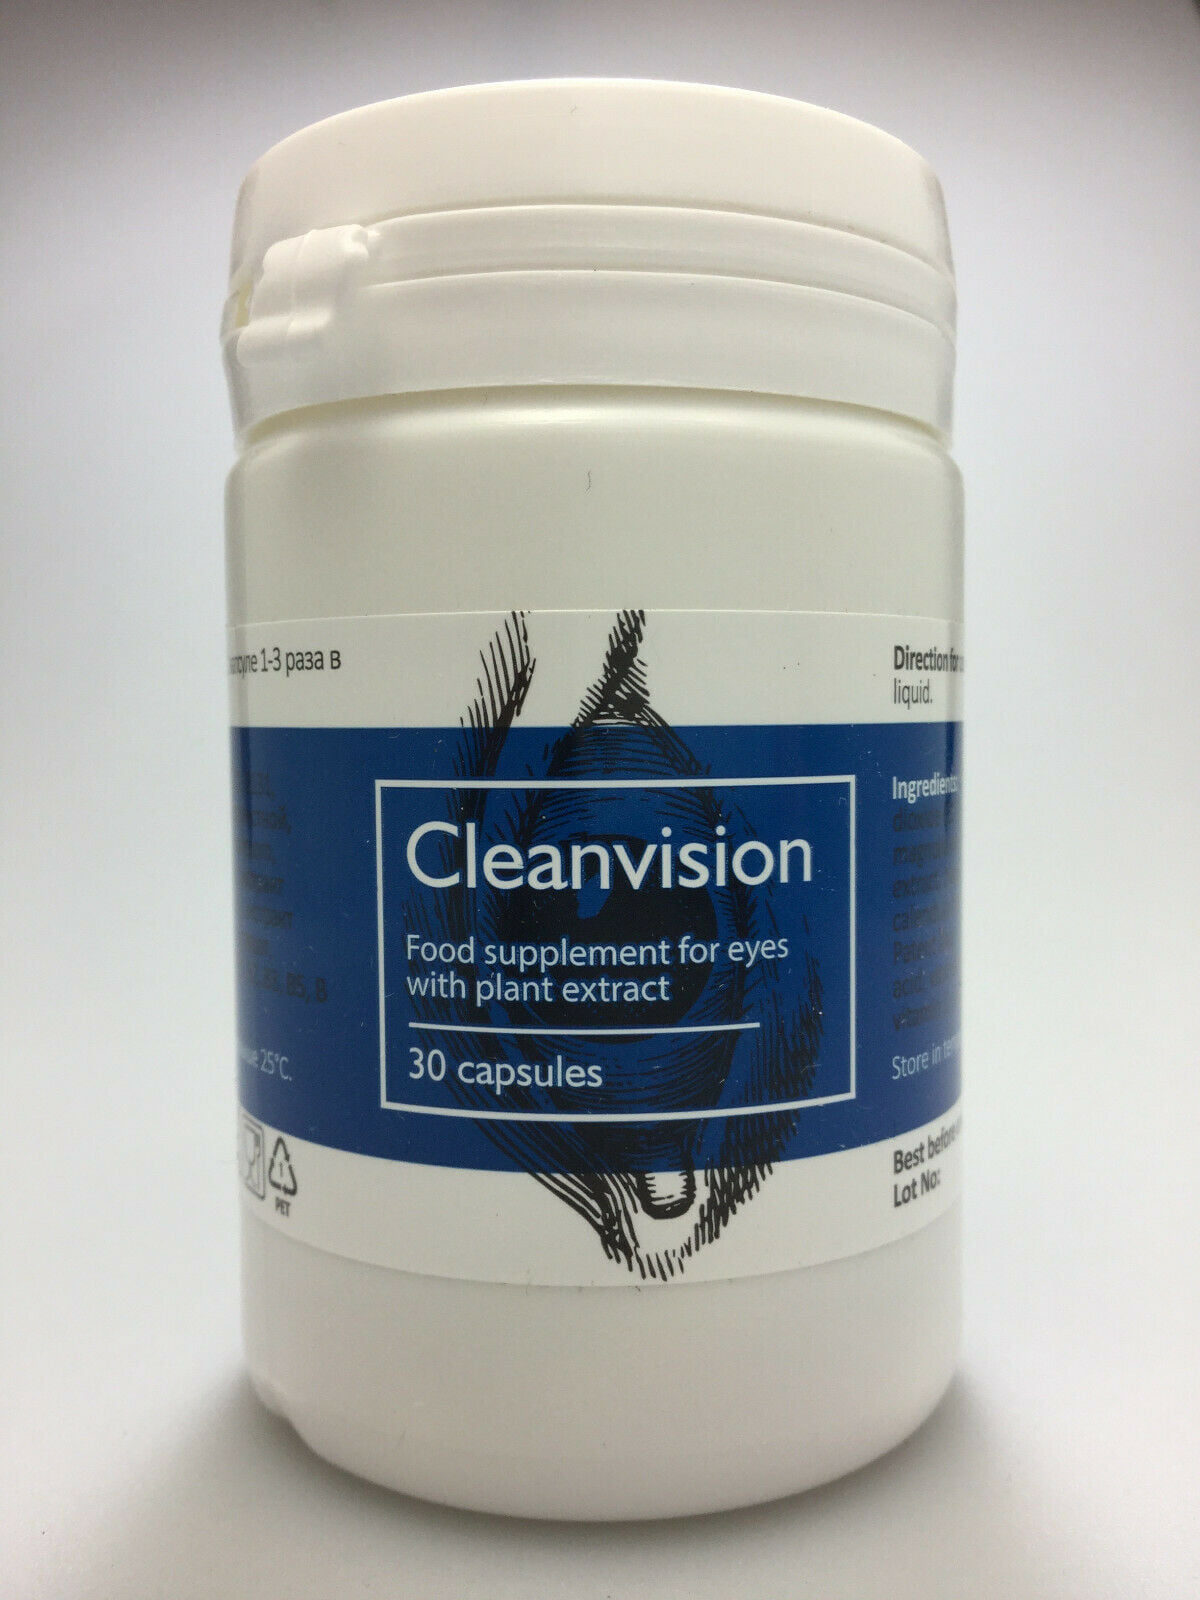 Cleanvision reviews